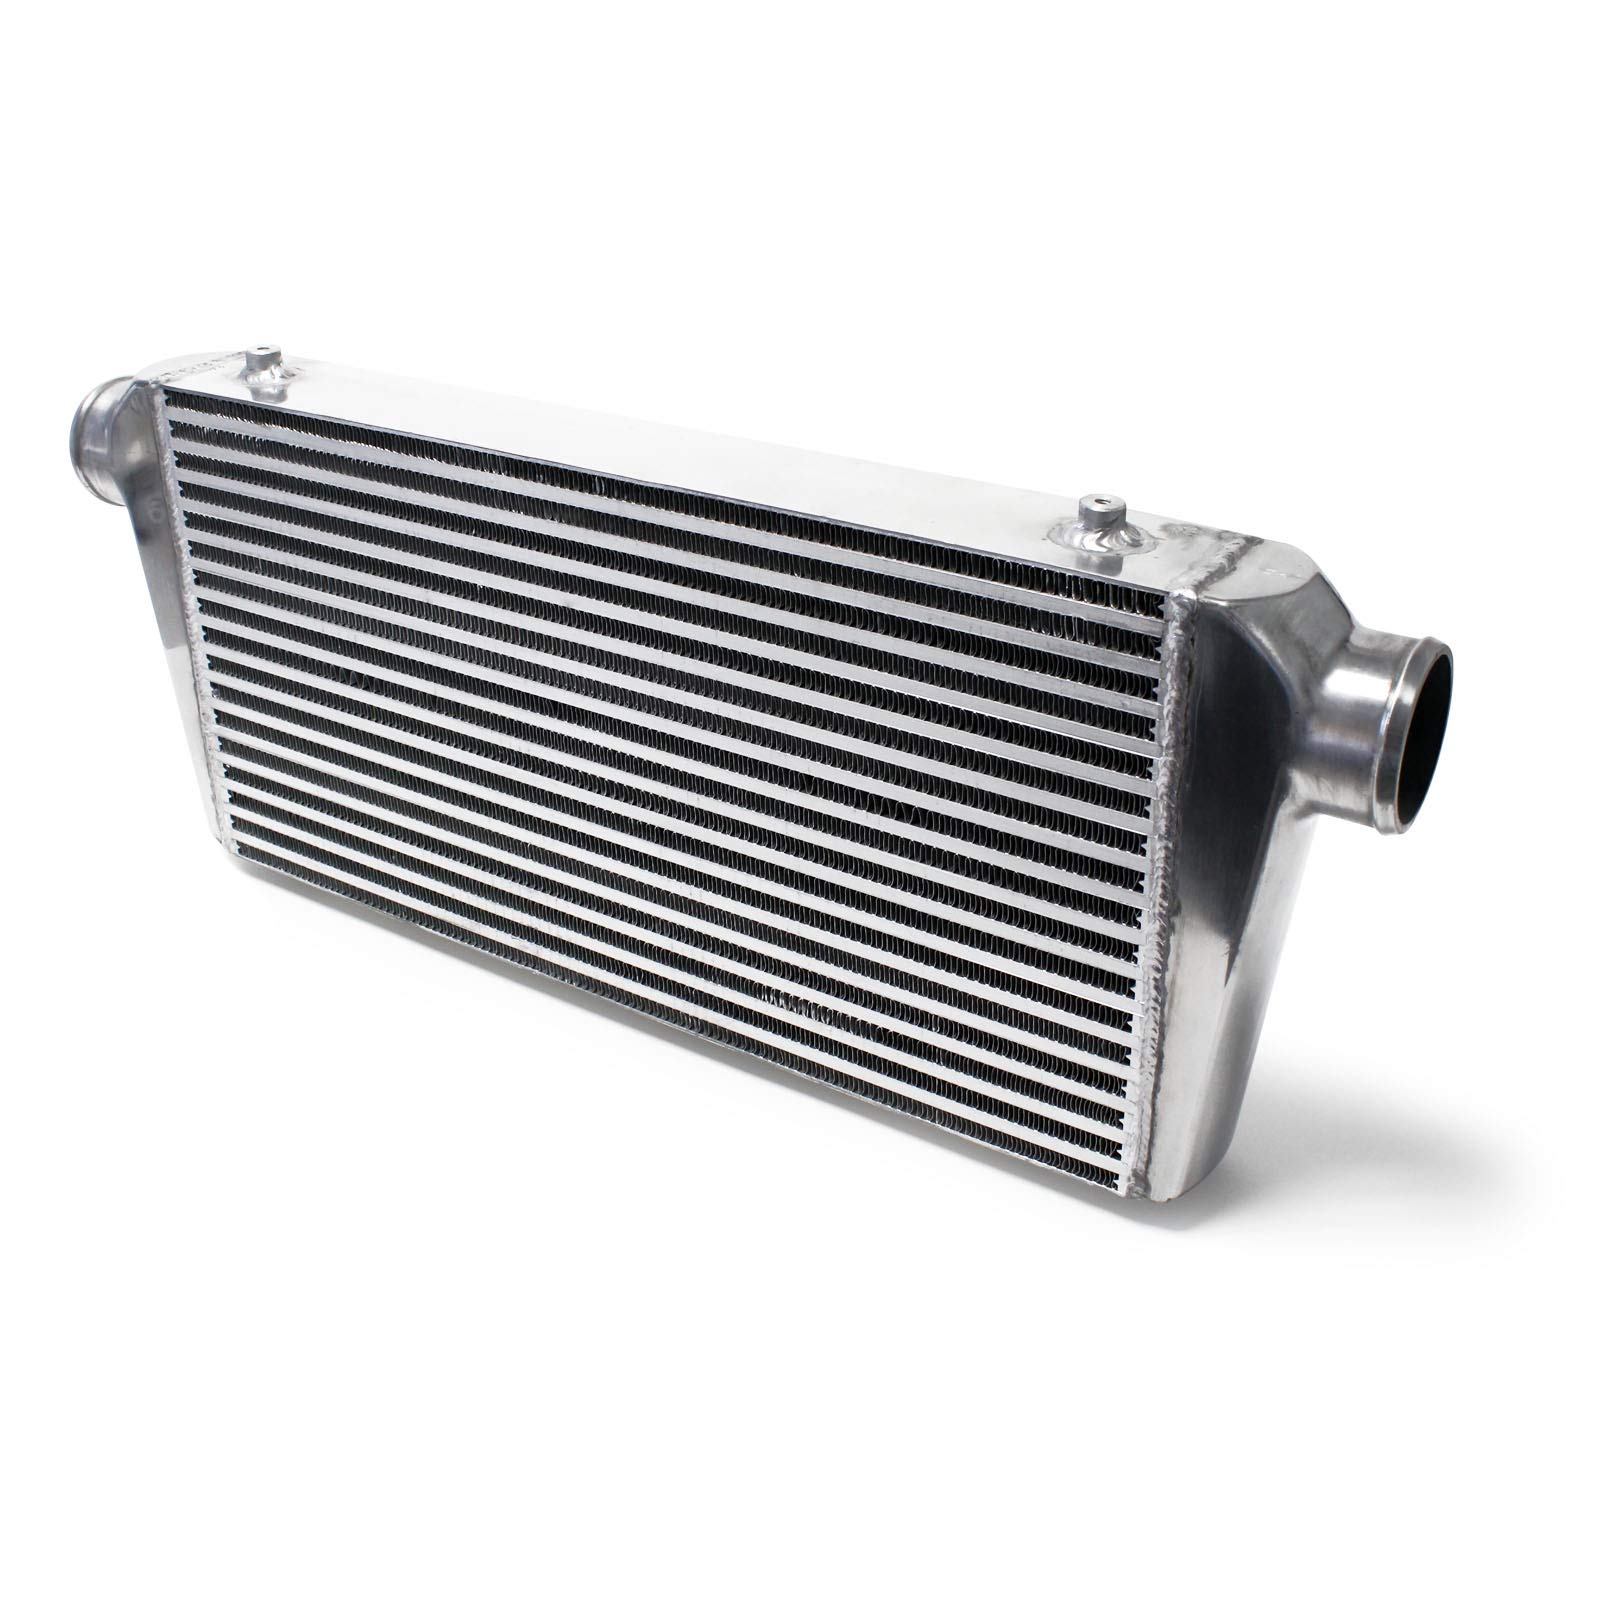 Ladeluftkühler LLK Aluminium Turbo INTERCOOLER No.001 Turbolader von Wiltec